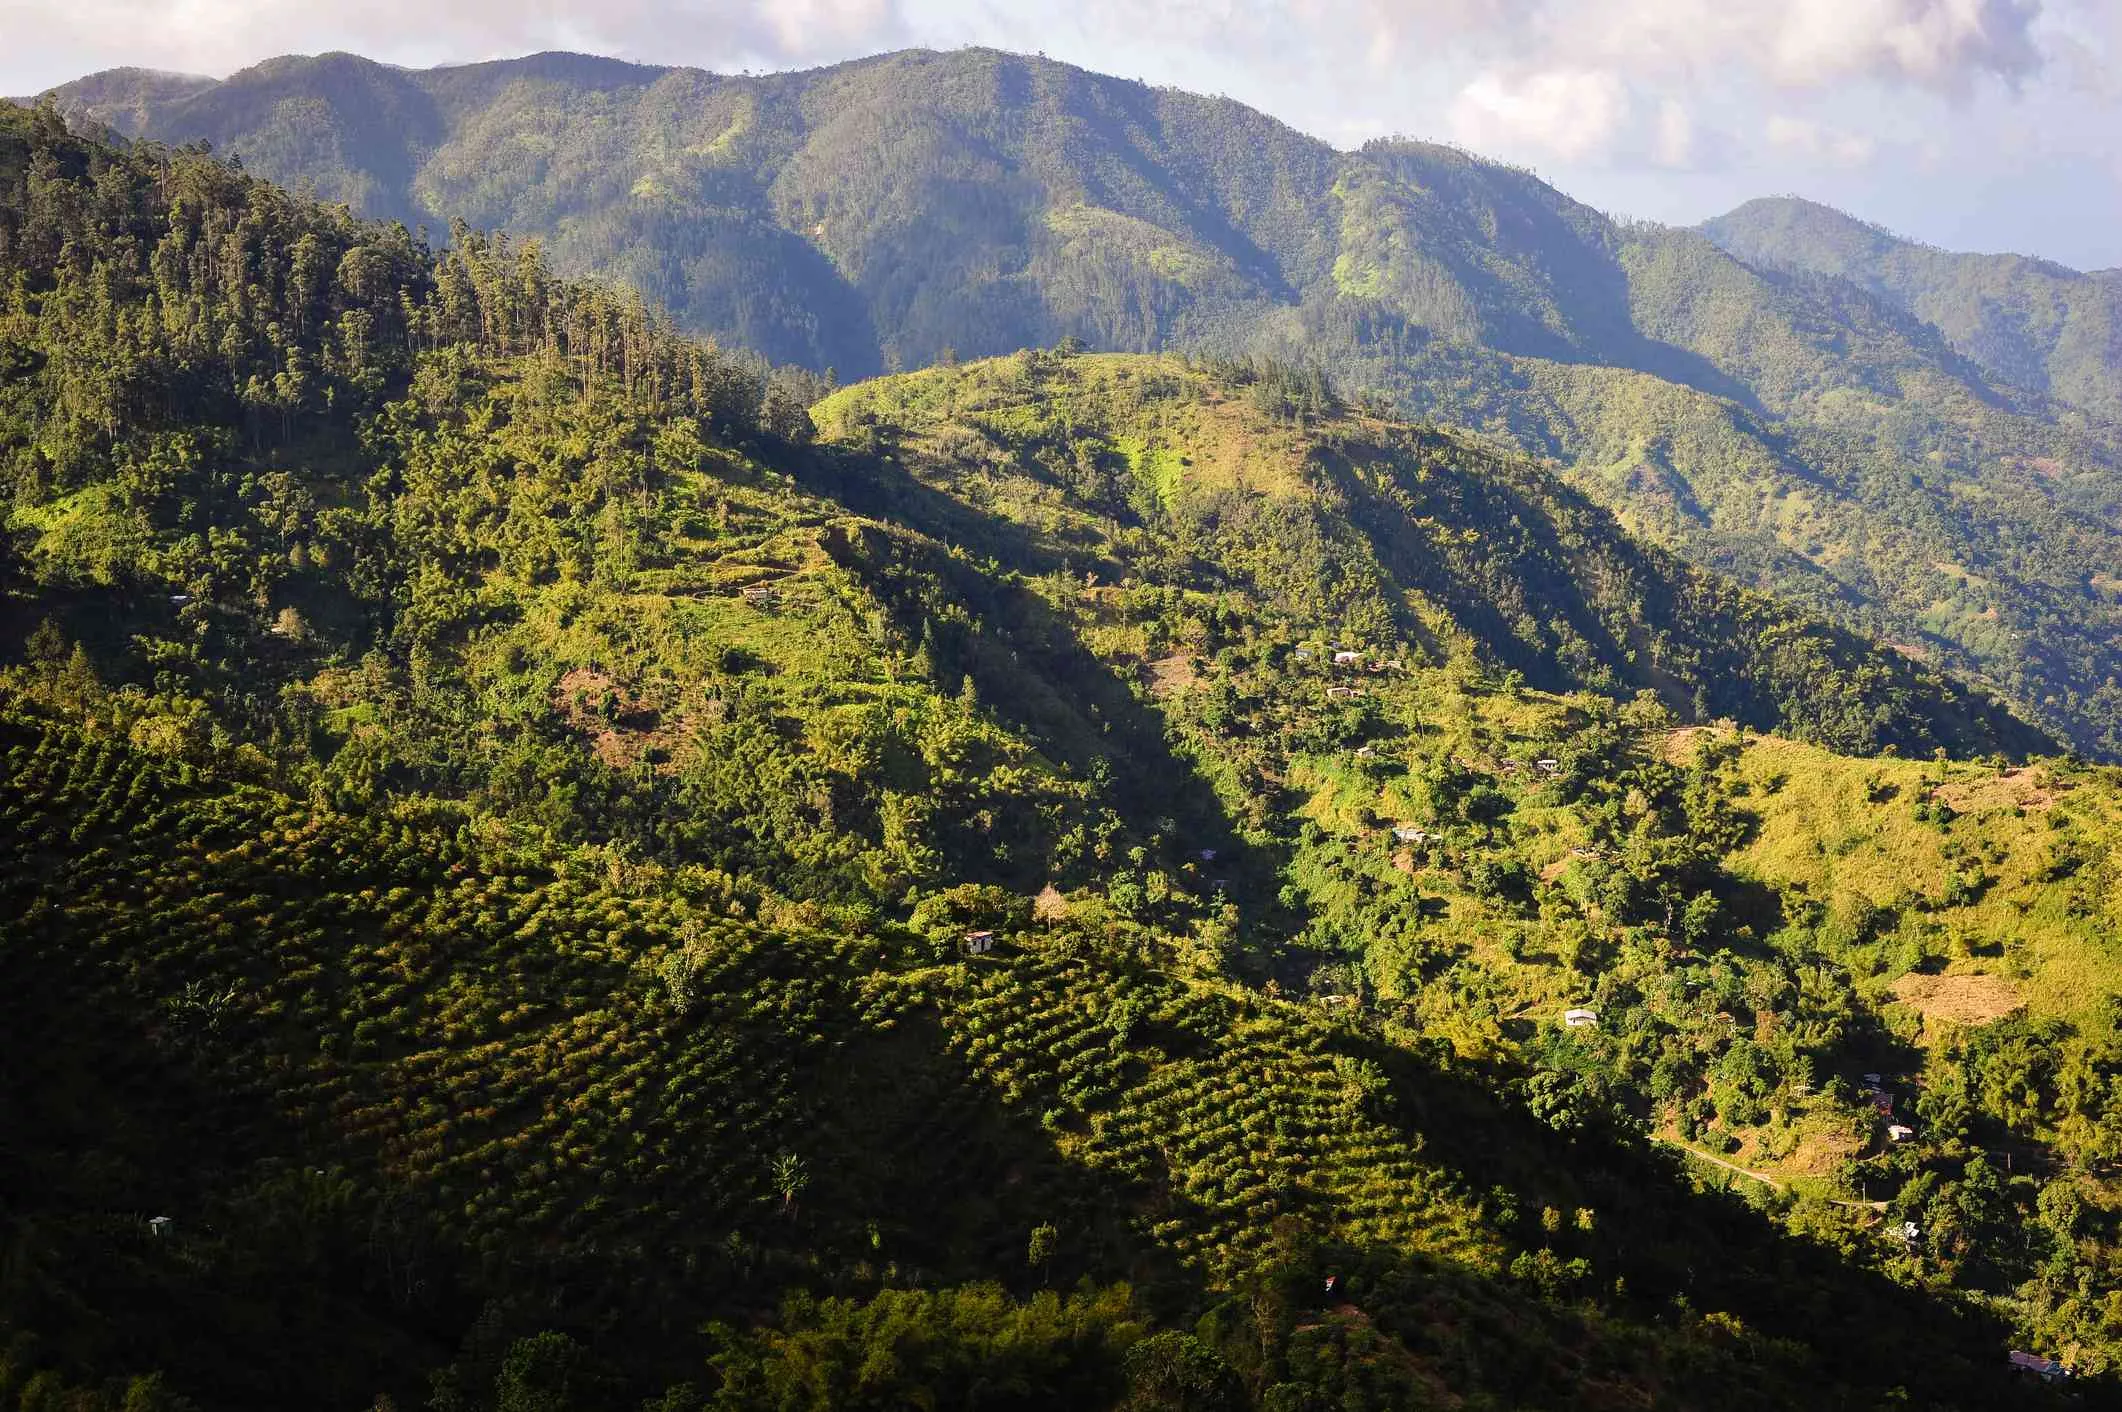 Oatley Mountain Trail in Jamaica, Caribbean | Trekking & Hiking - Rated 0.7